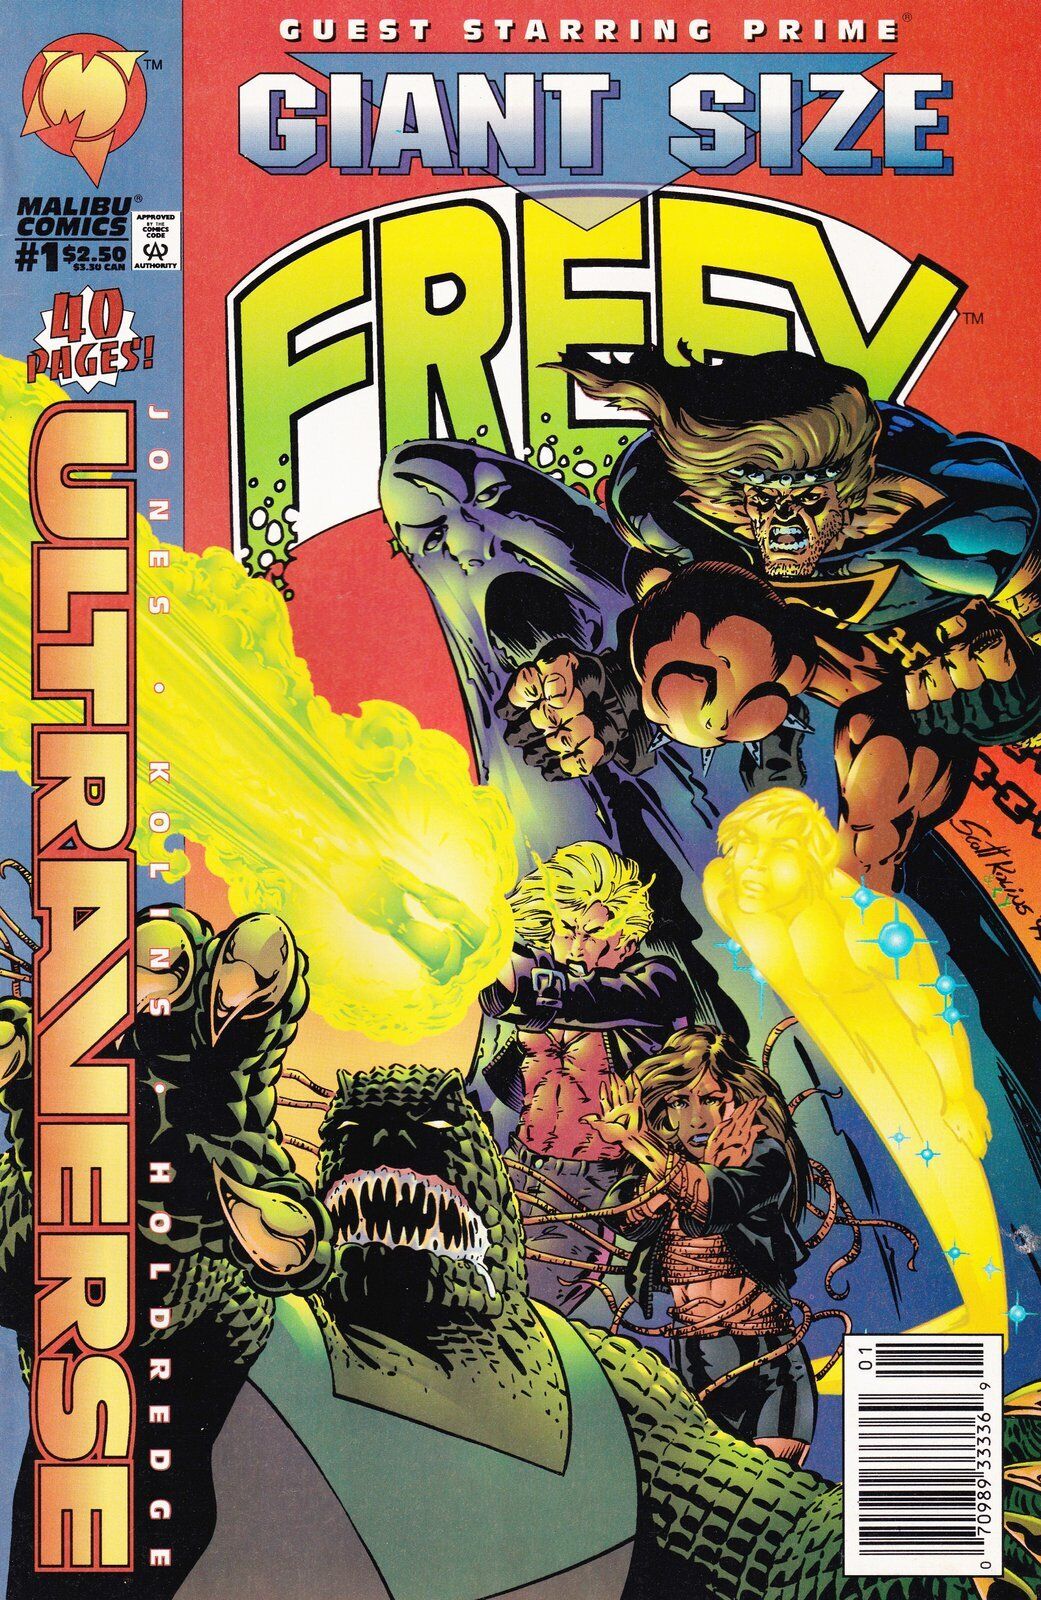 Giant Size Freex #1 Newsstand Cover Malibu Comics